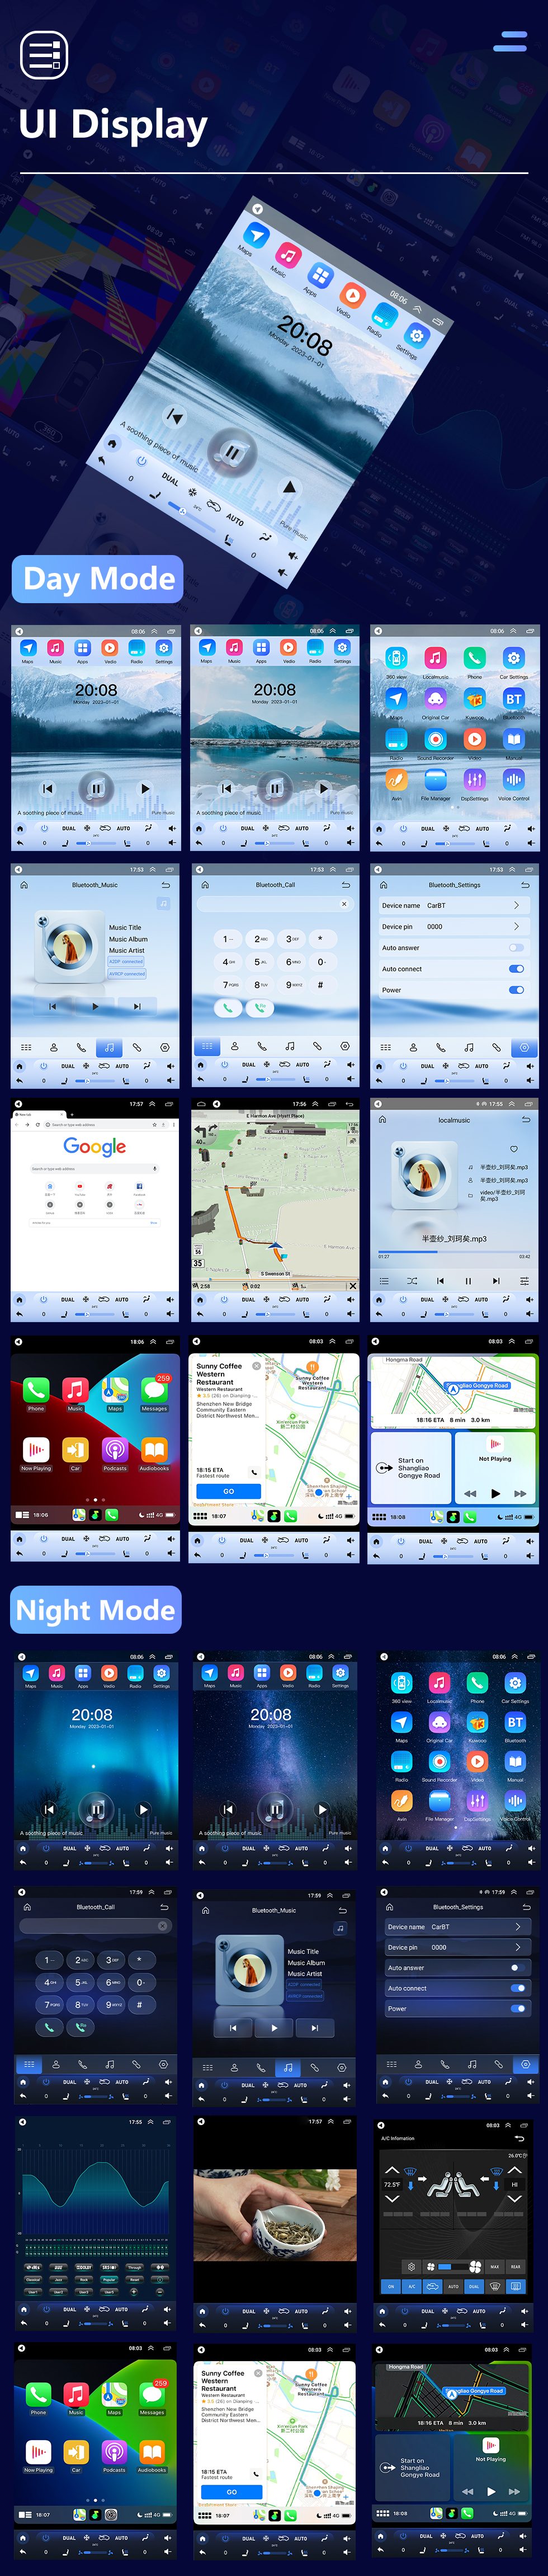 Seicane OEM 9,7 Zoll Android 10.0 Radio für 2012-2015 Ford Focus Bluetooth WIFI HD Touchscreen GPS Navigationsunterstützung Carplay Rückfahrkamera DAB+ OBD2